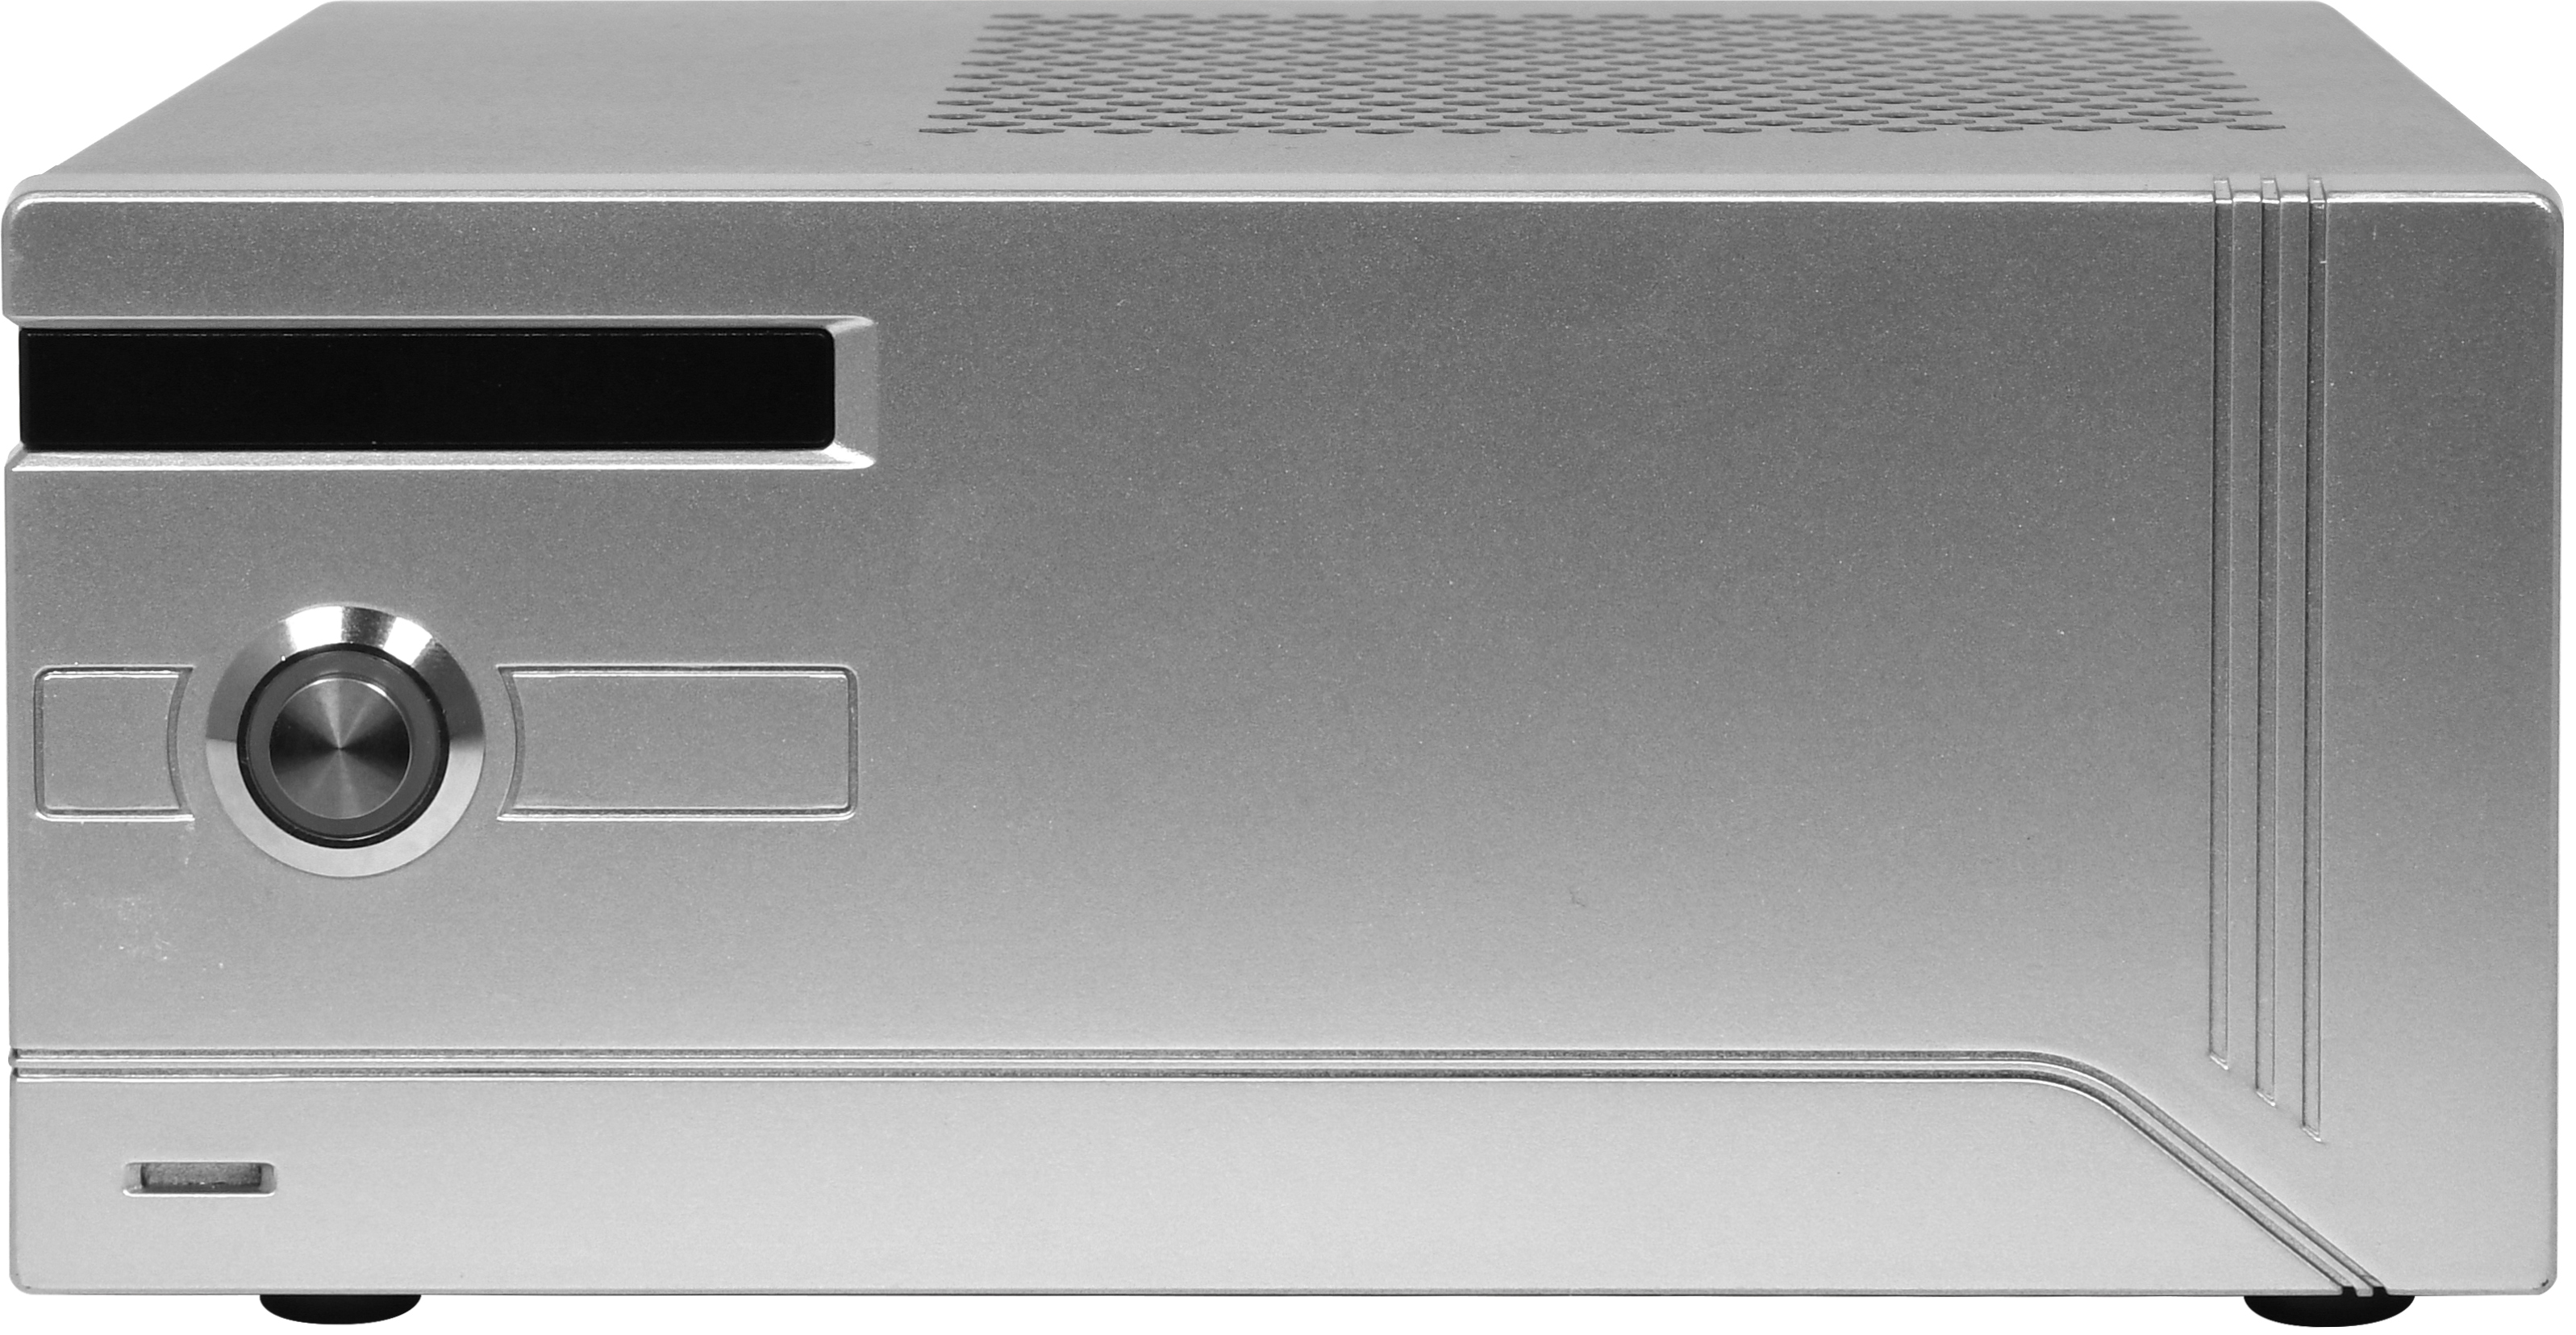 GTX 1060 6GB 内蔵 コンパクト eGPUボックス | carolinealboneti.com